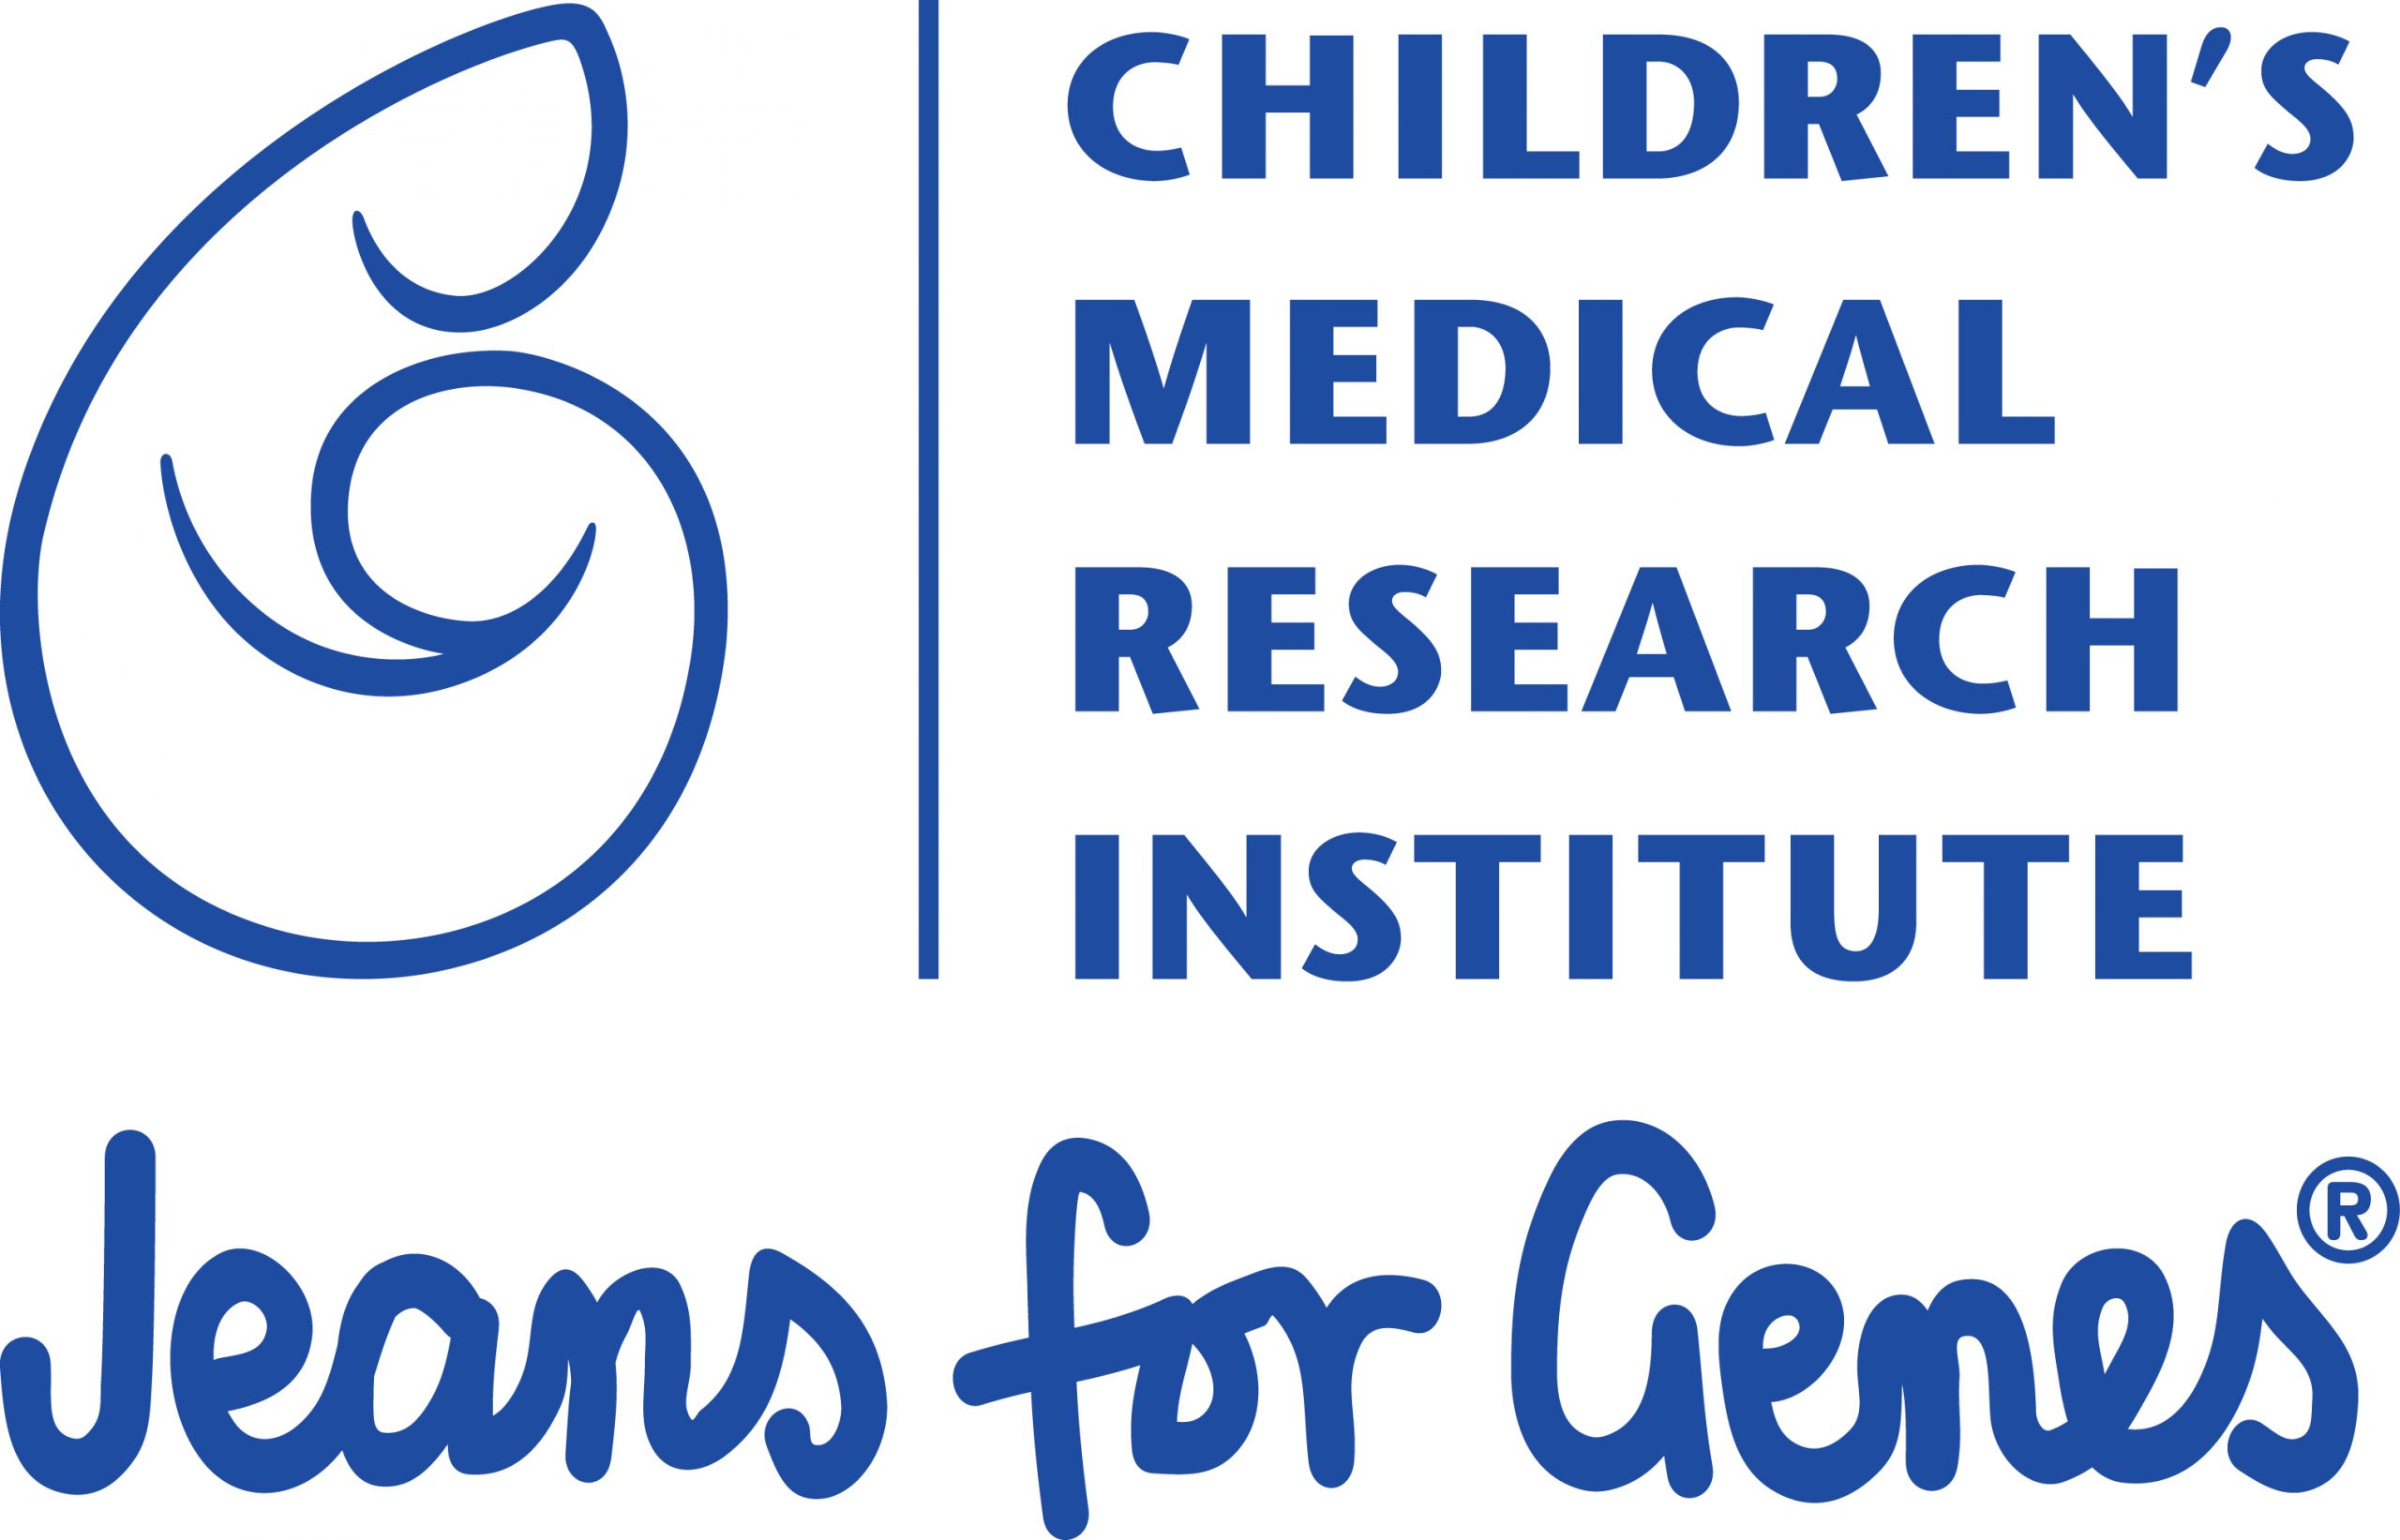 Children’s Medical Research Institute logo